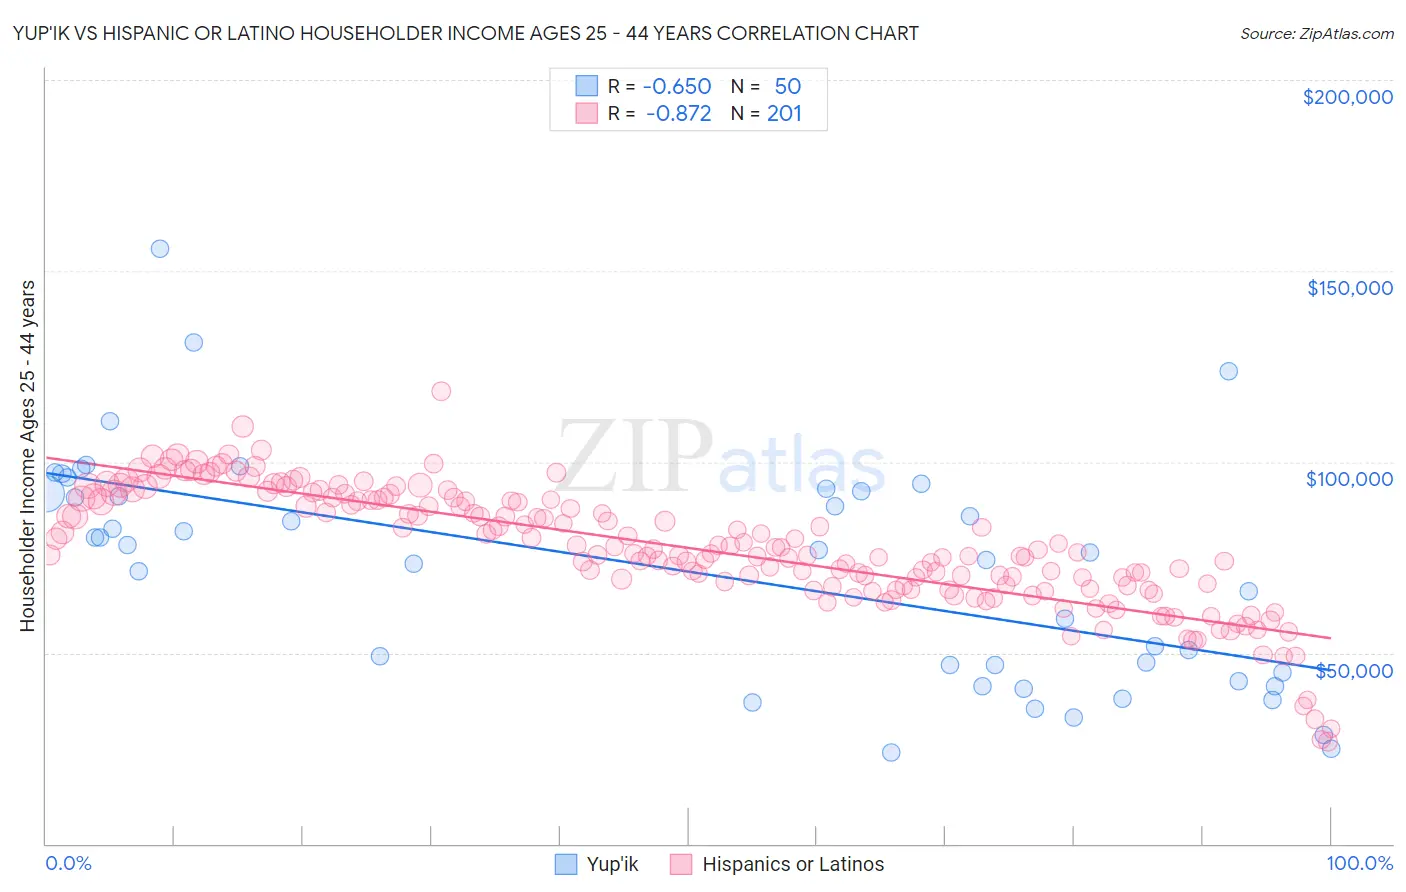 Yup'ik vs Hispanic or Latino Householder Income Ages 25 - 44 years